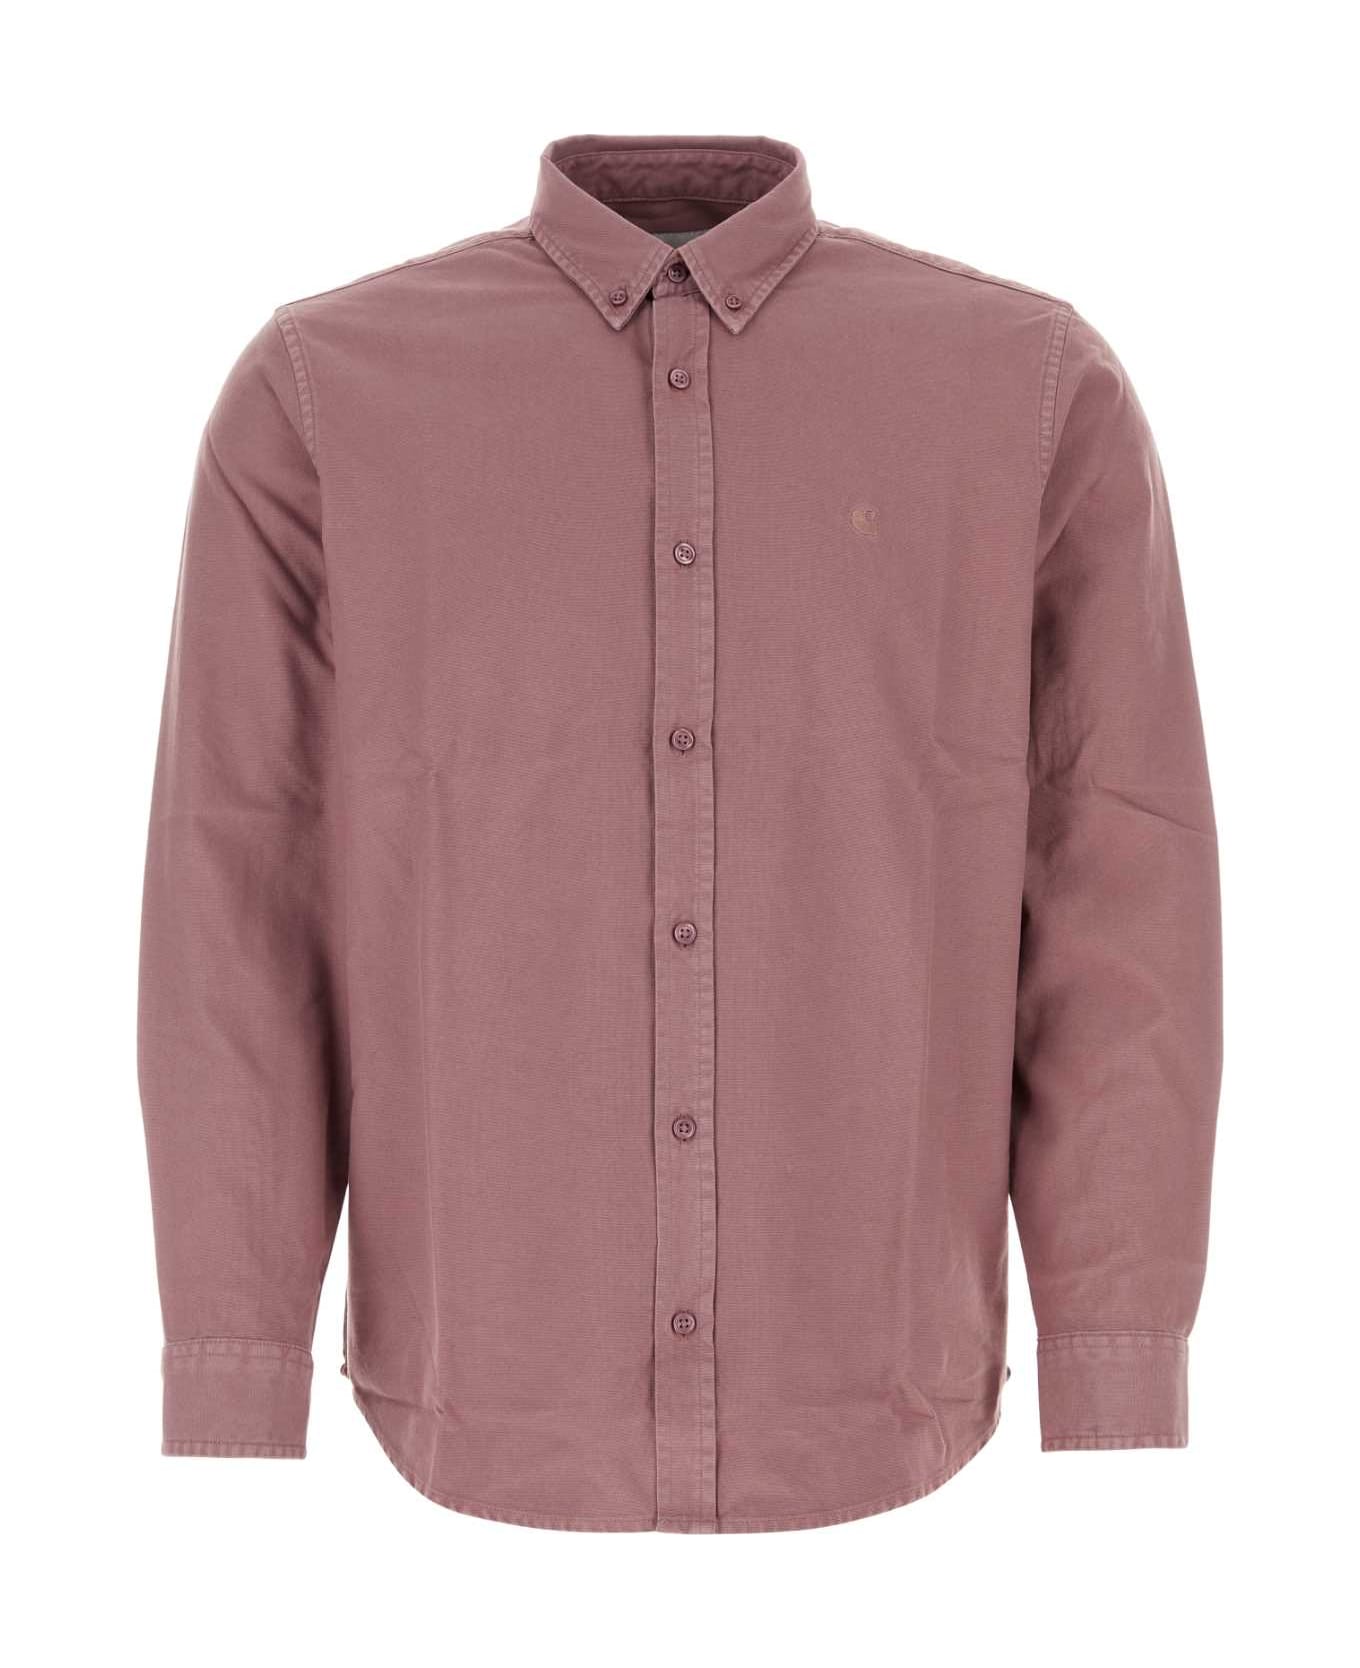 Carhartt Antiqued Pink Cotton L/s Bolton Shirt - DAFNE シャツ